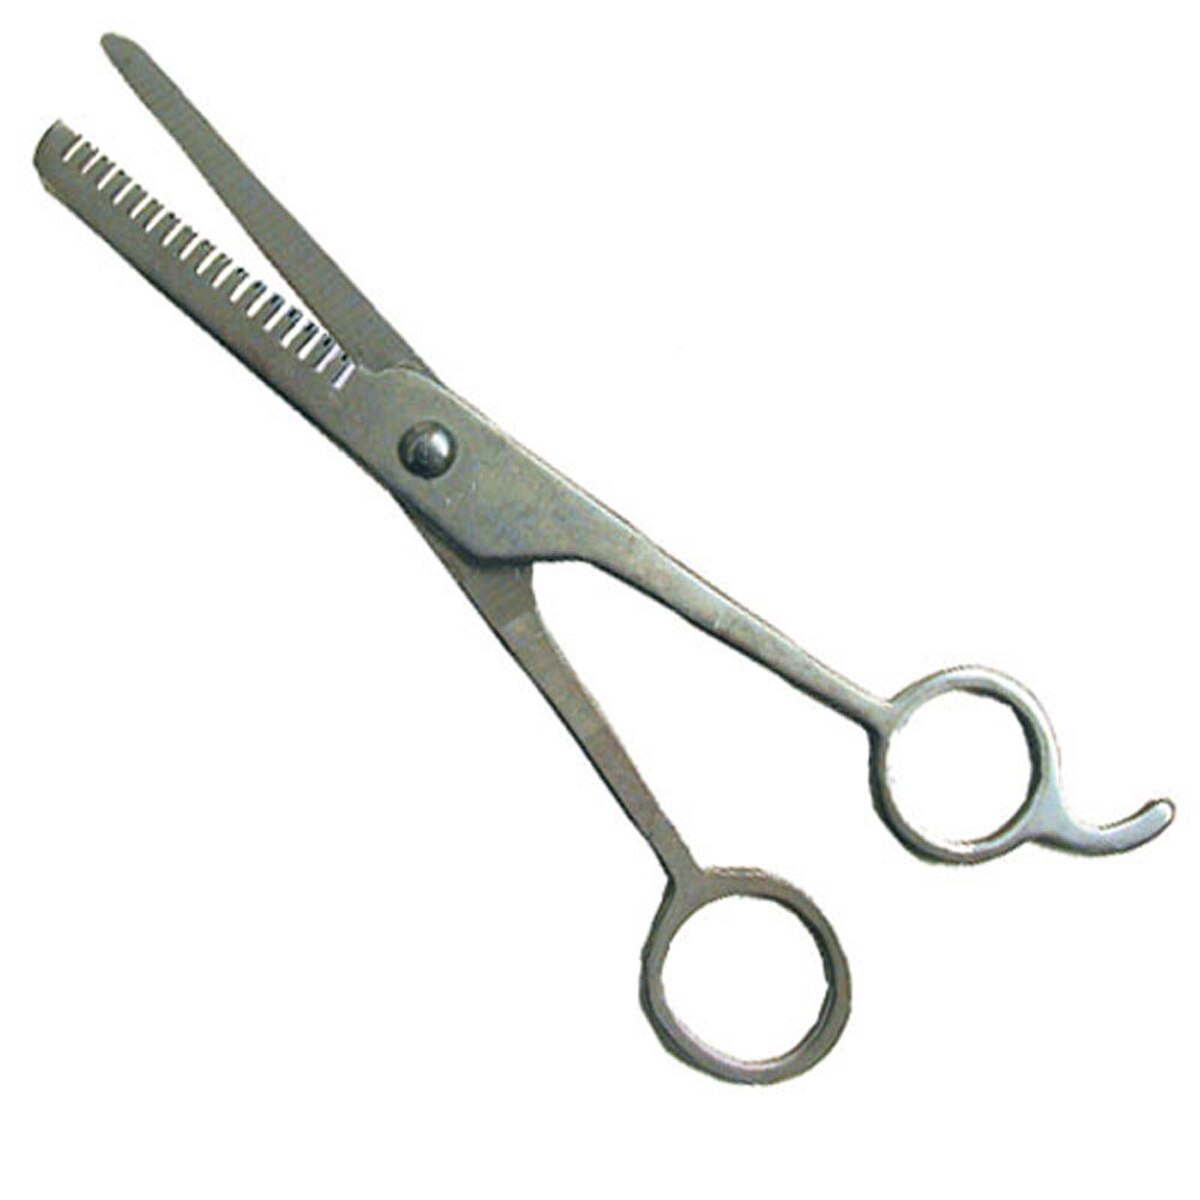 Horse Care Tool 7” ProRider Steel Thinning Shears Scissors Grooming Mane 98462 